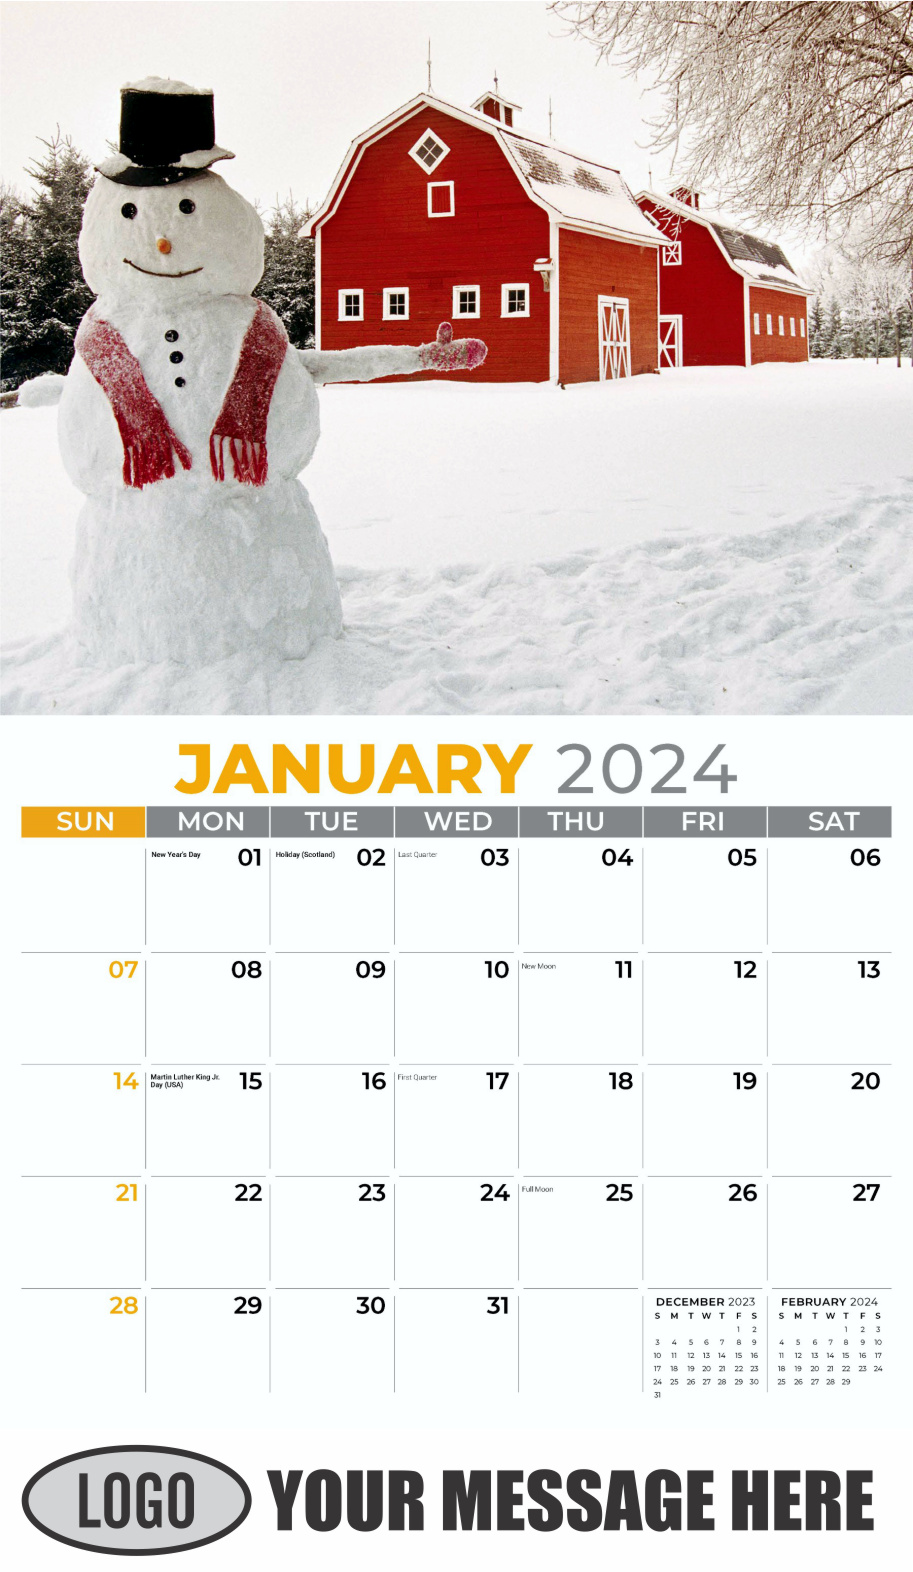 Country Spirit 2024 Business Advertising Calendar - January